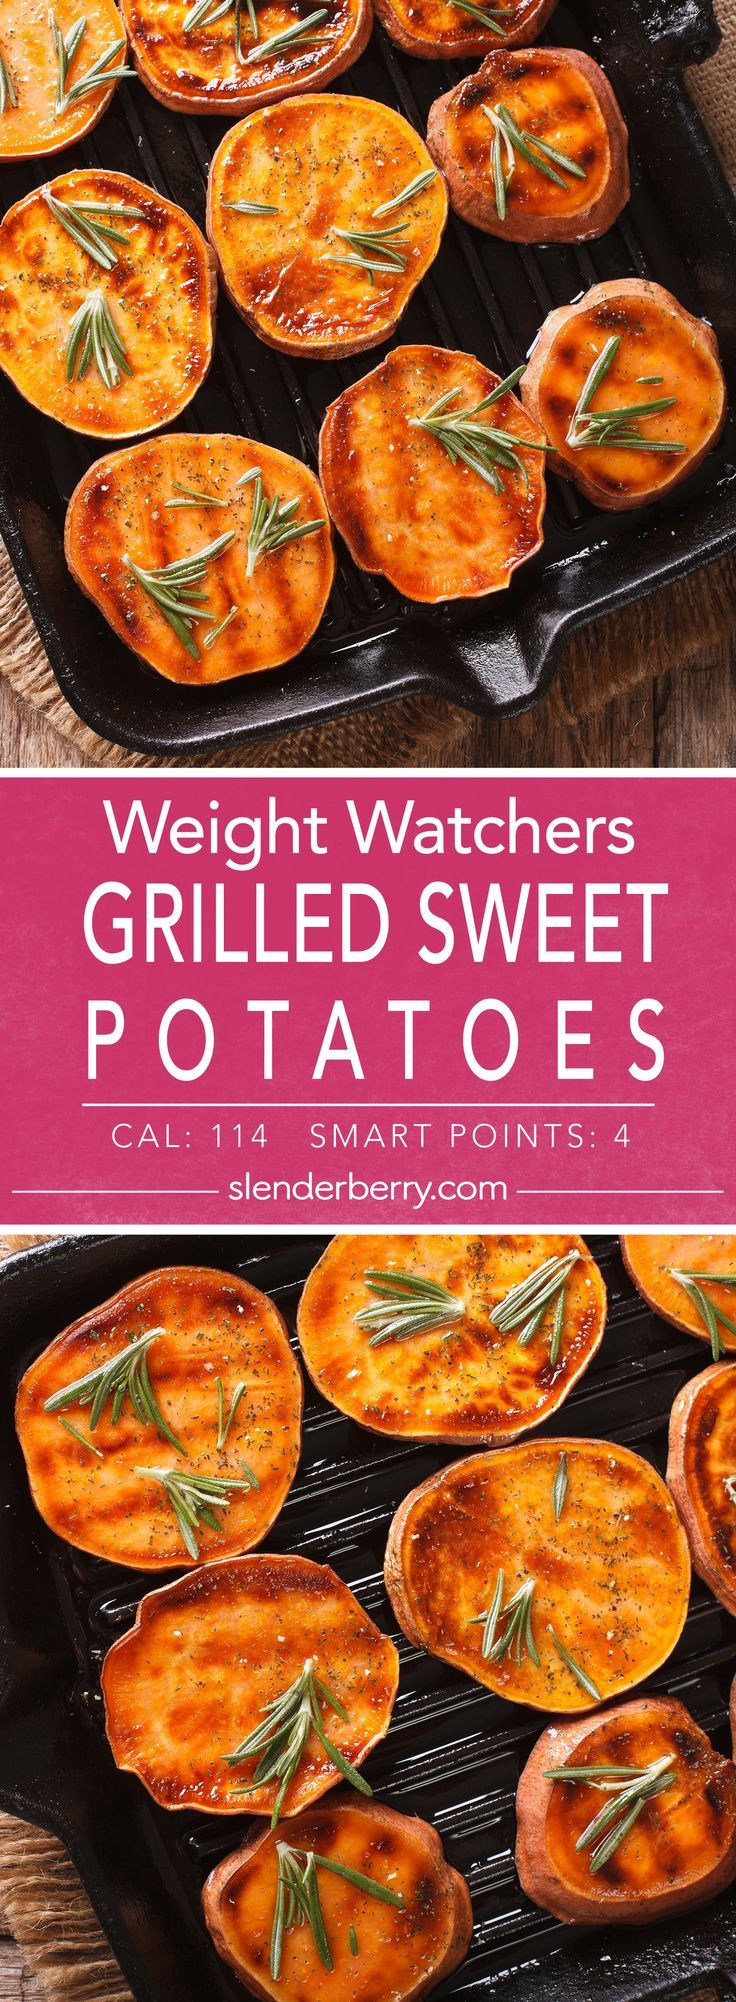 Low Calorie Sweet Potato Recipes
 Grilled Sweet Potatoes Recipe